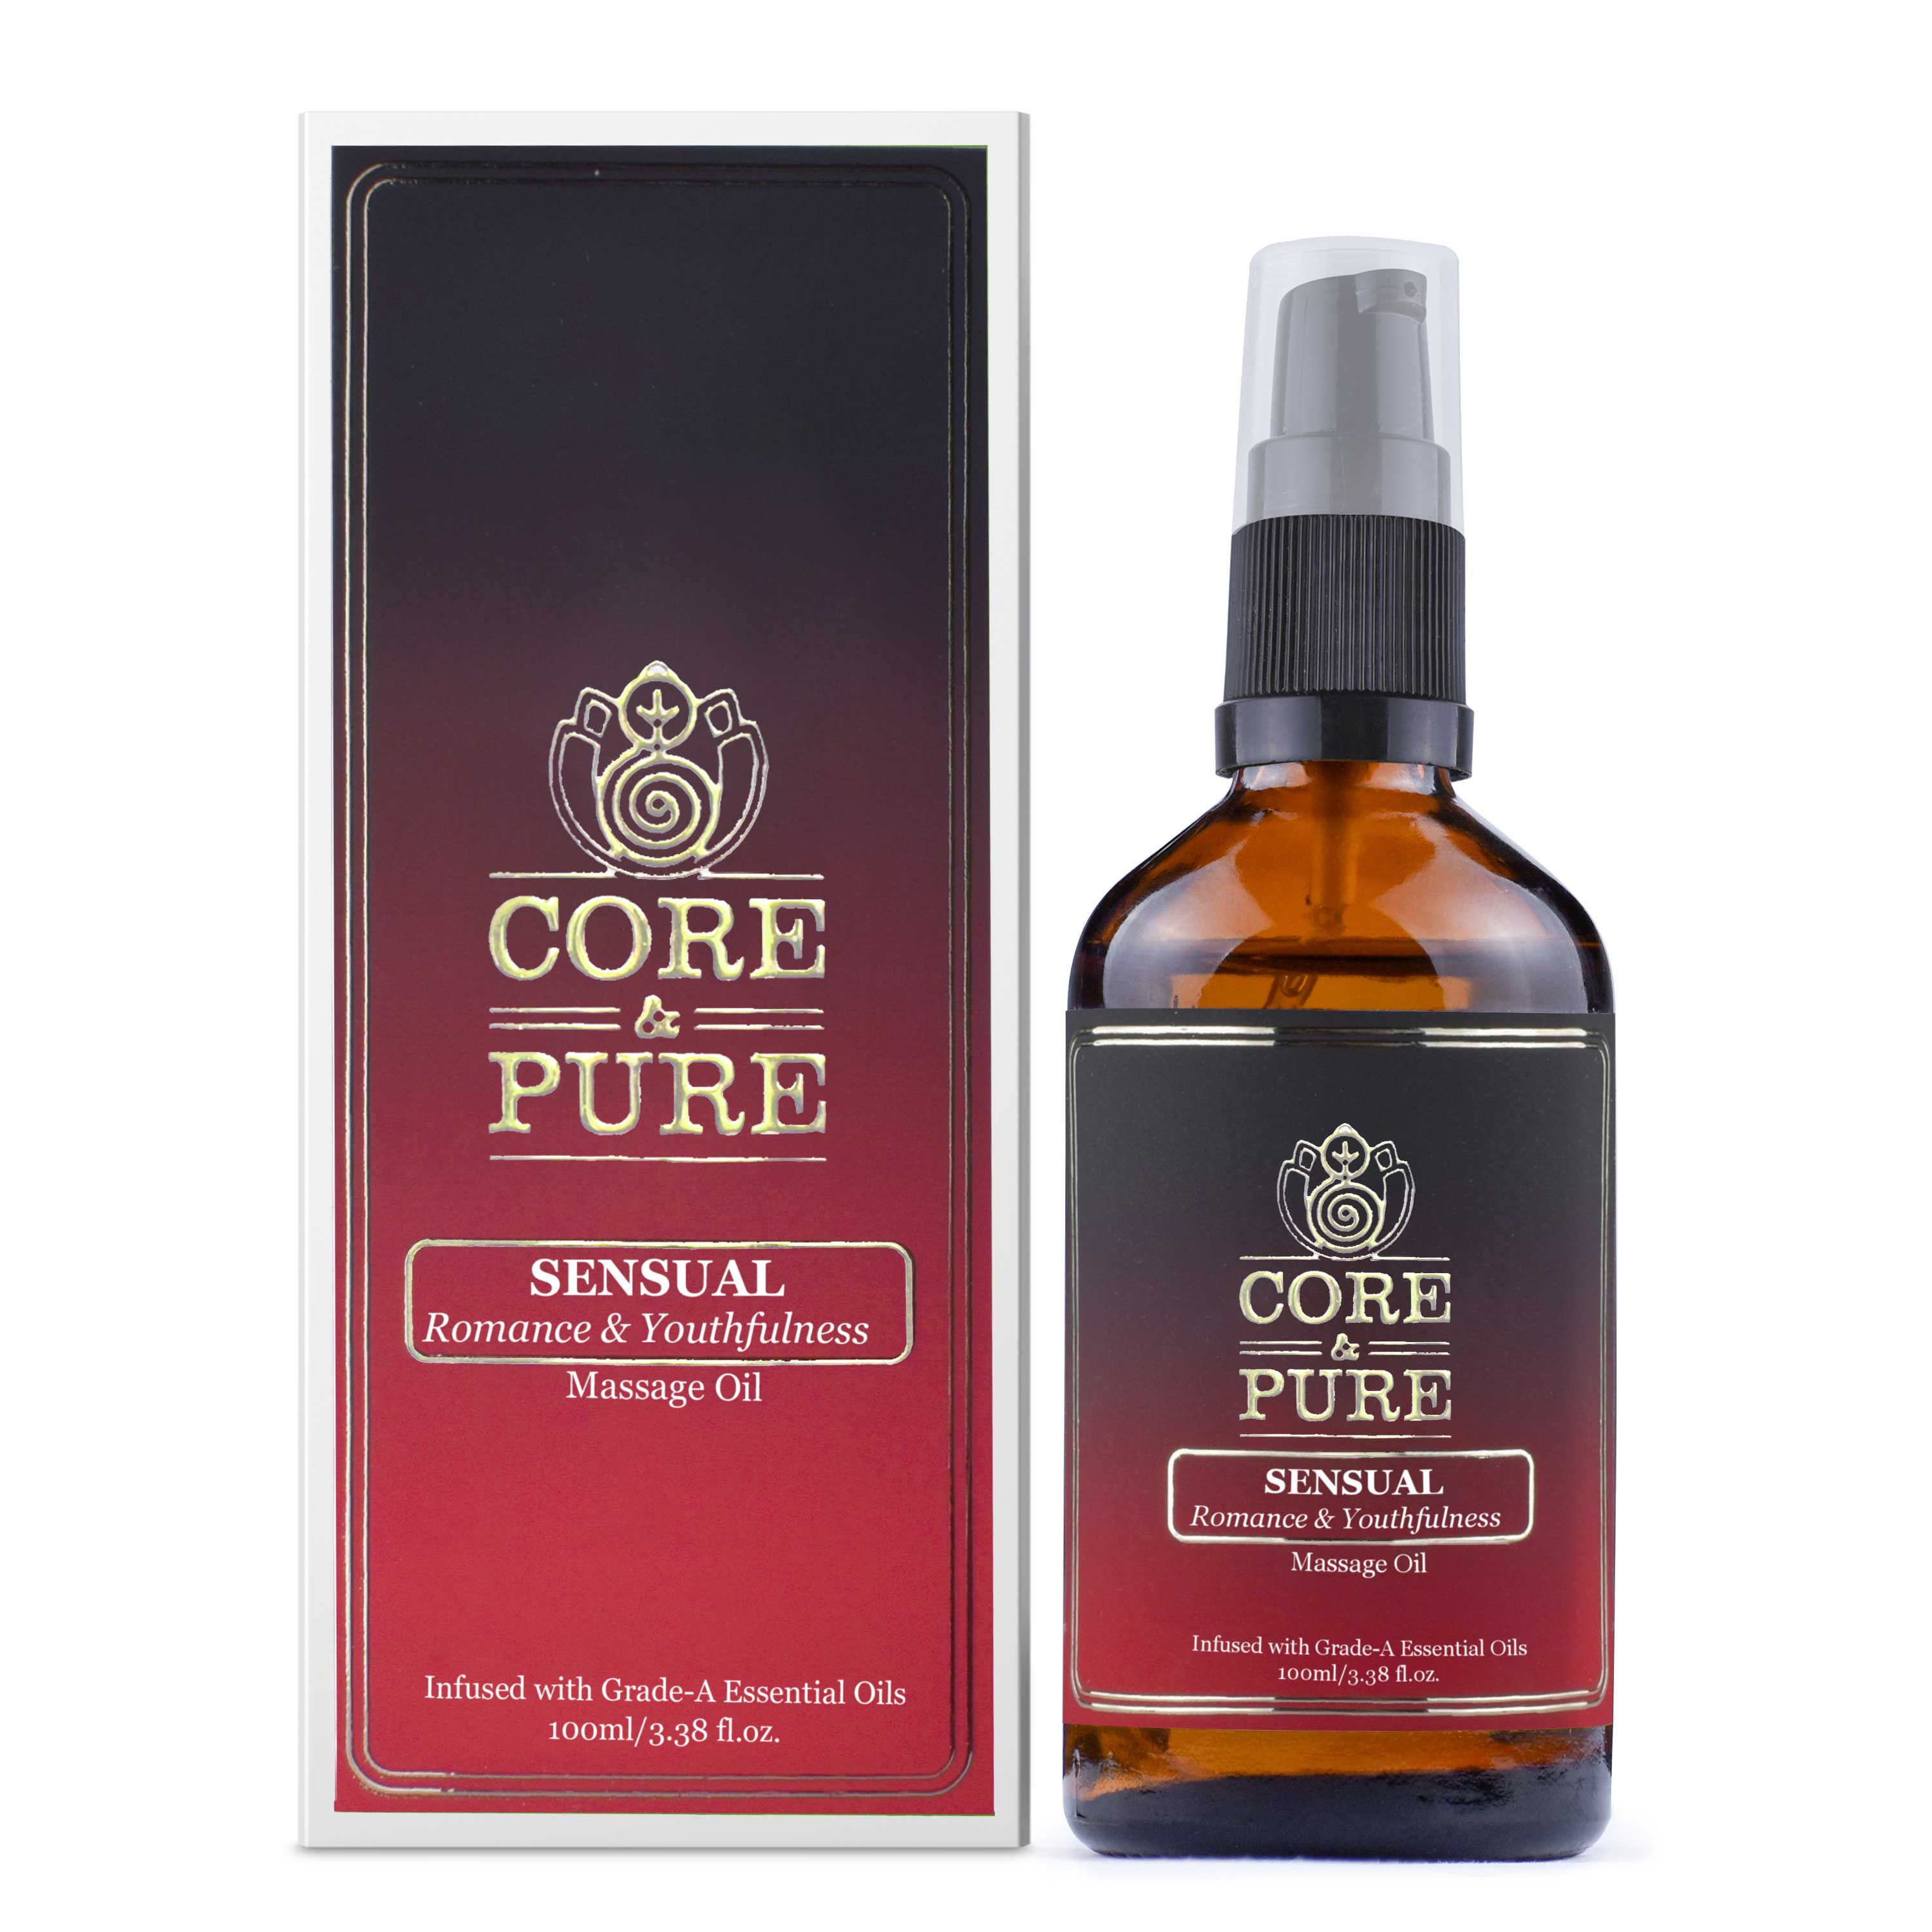 Core & Pure Sensual Body Massage Oil- Promotes Romance and Youthfulness